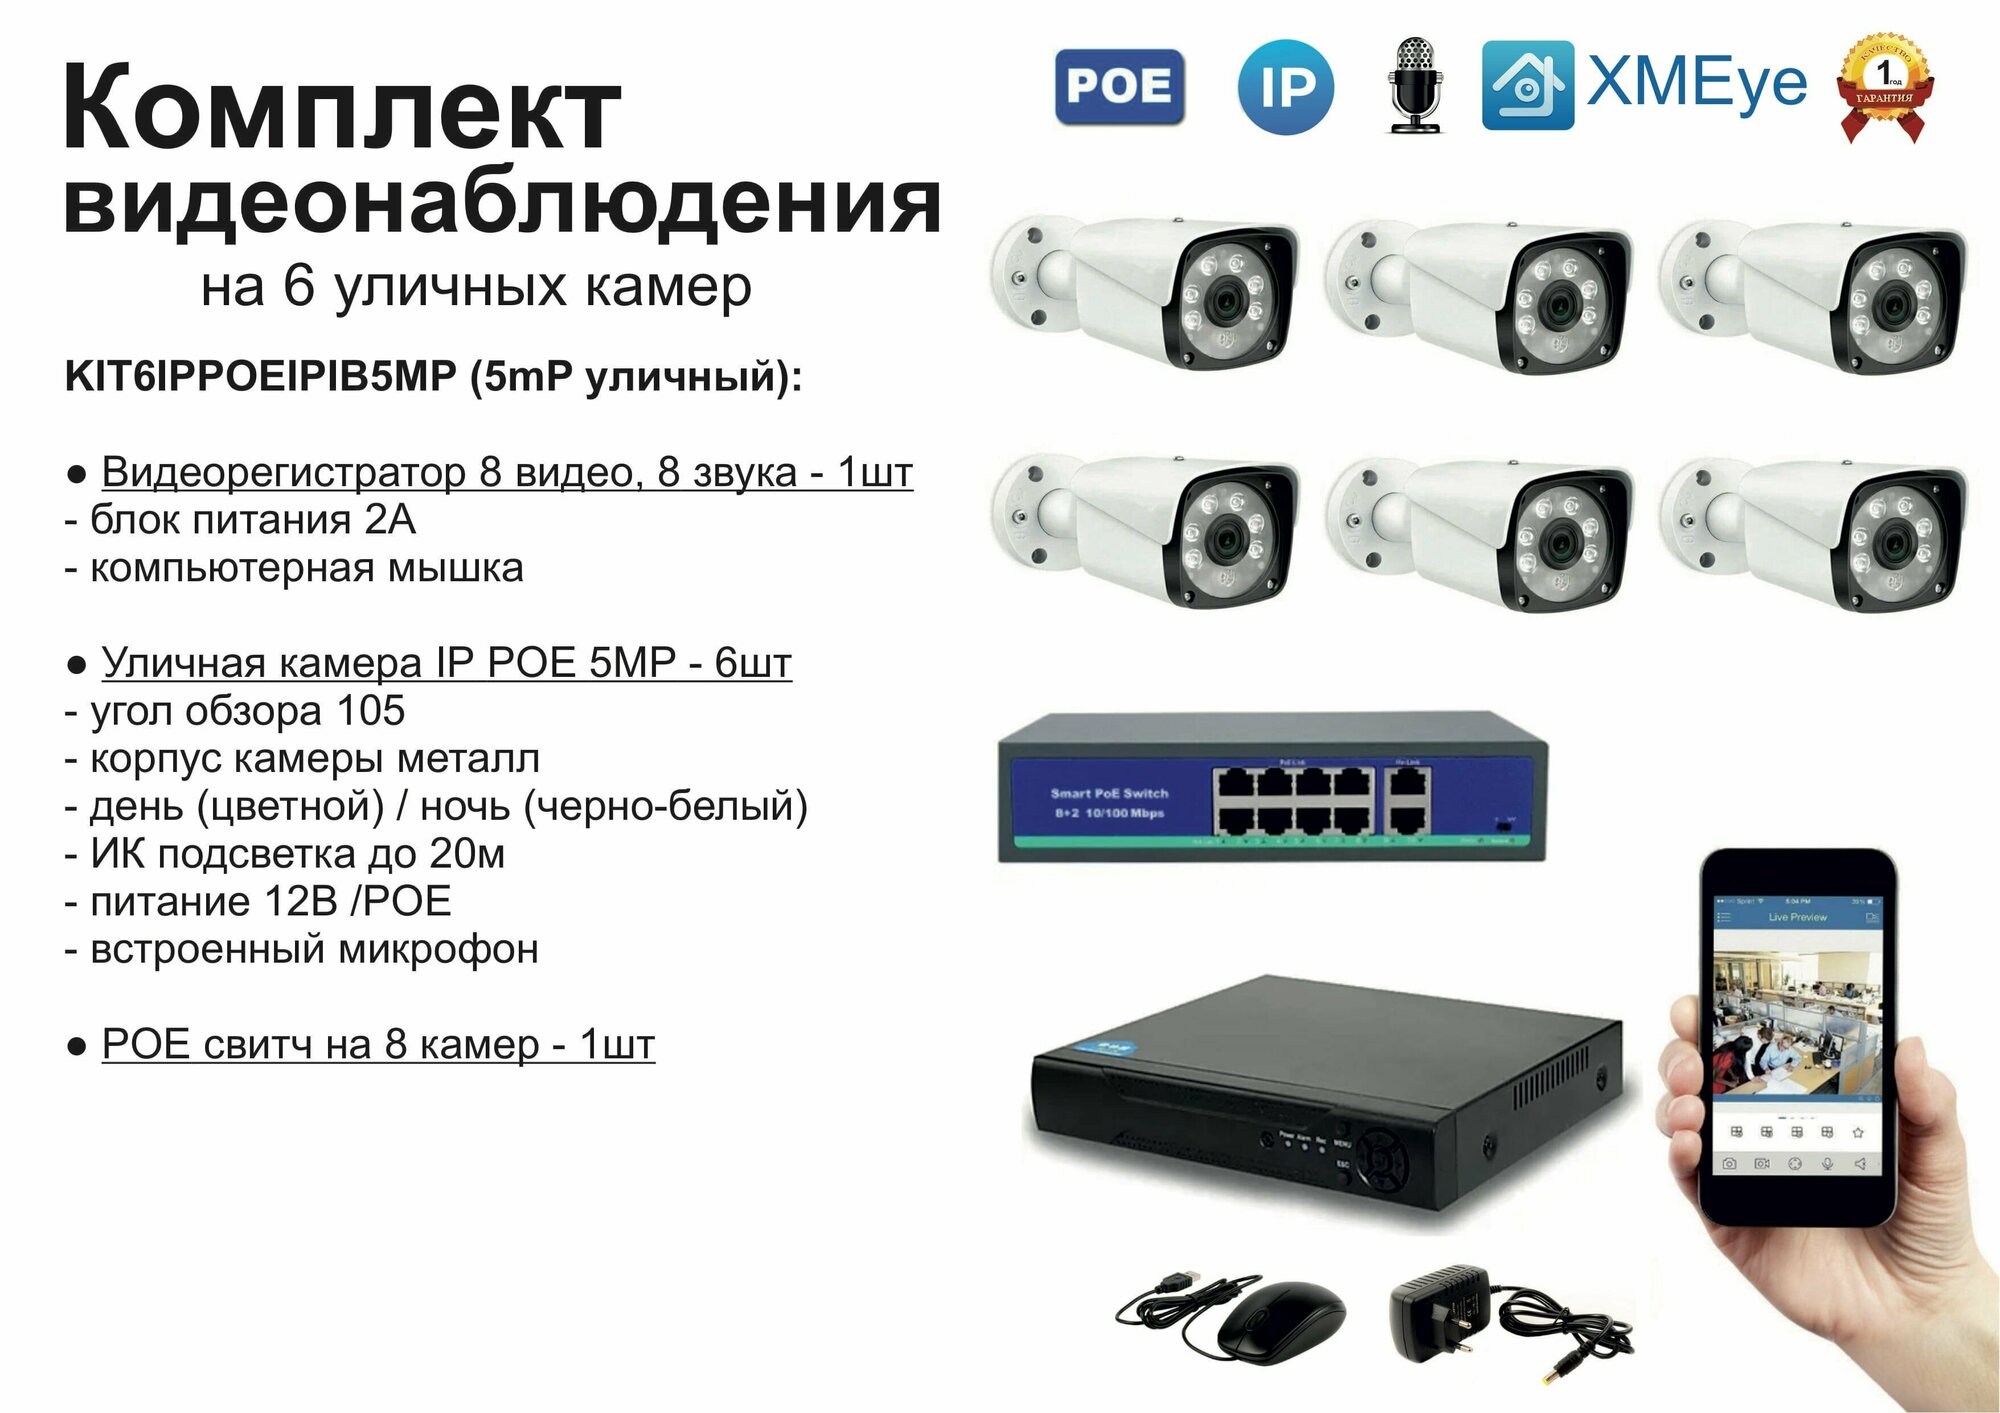 KIT6IPPOEIP20MB3MP. Комплект видеонаблюдения IP POE на 6 камер. Уличный, 3мП